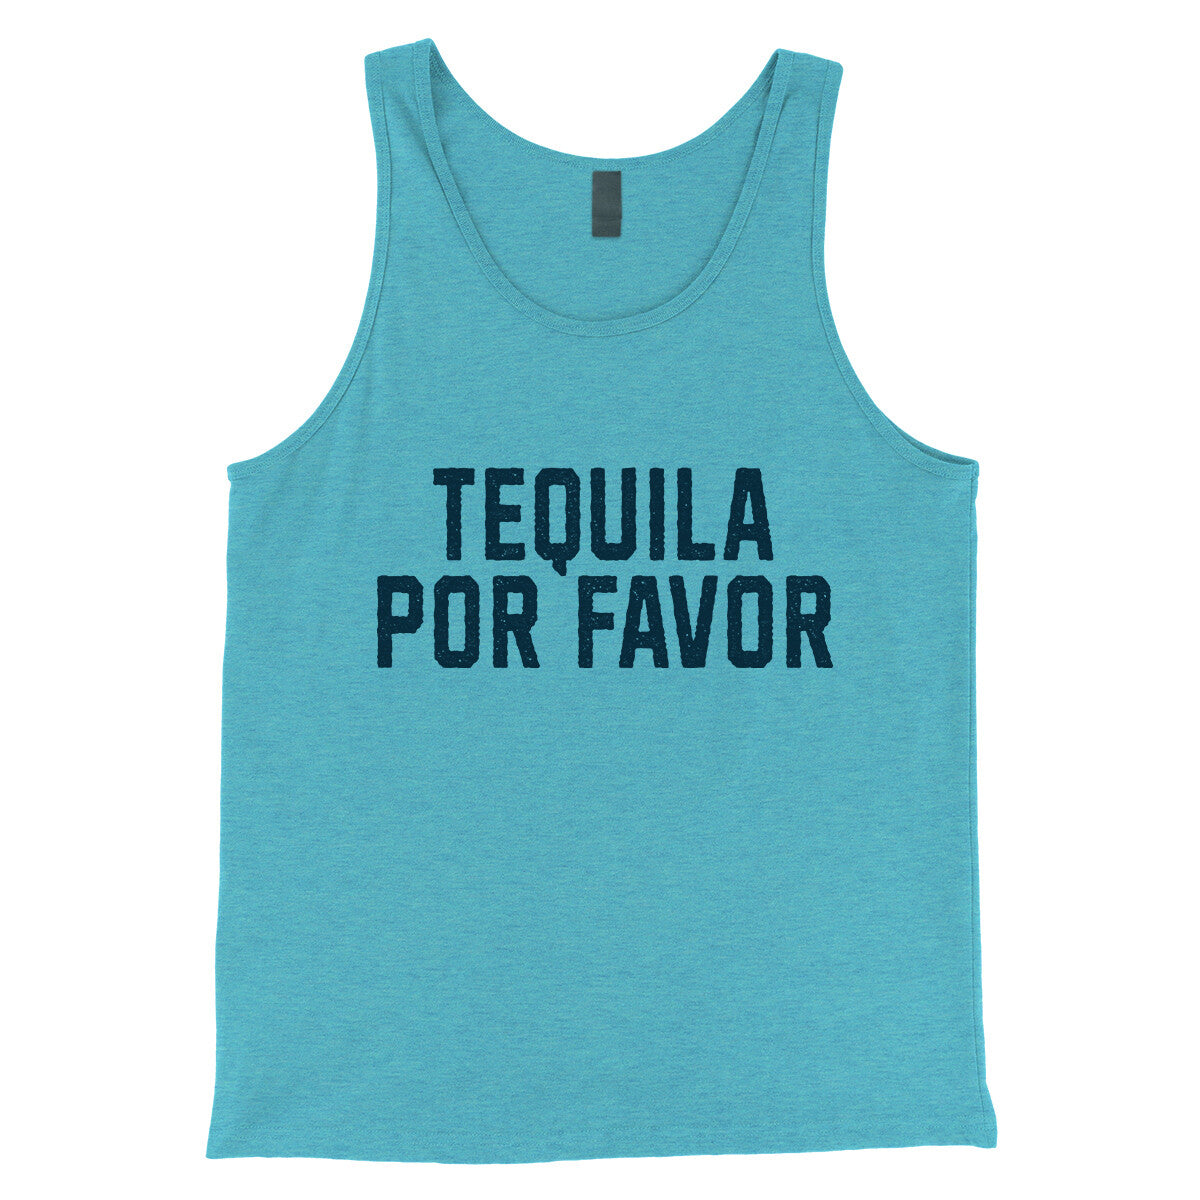 Tequila Por Favor in Aqua Triblend Color